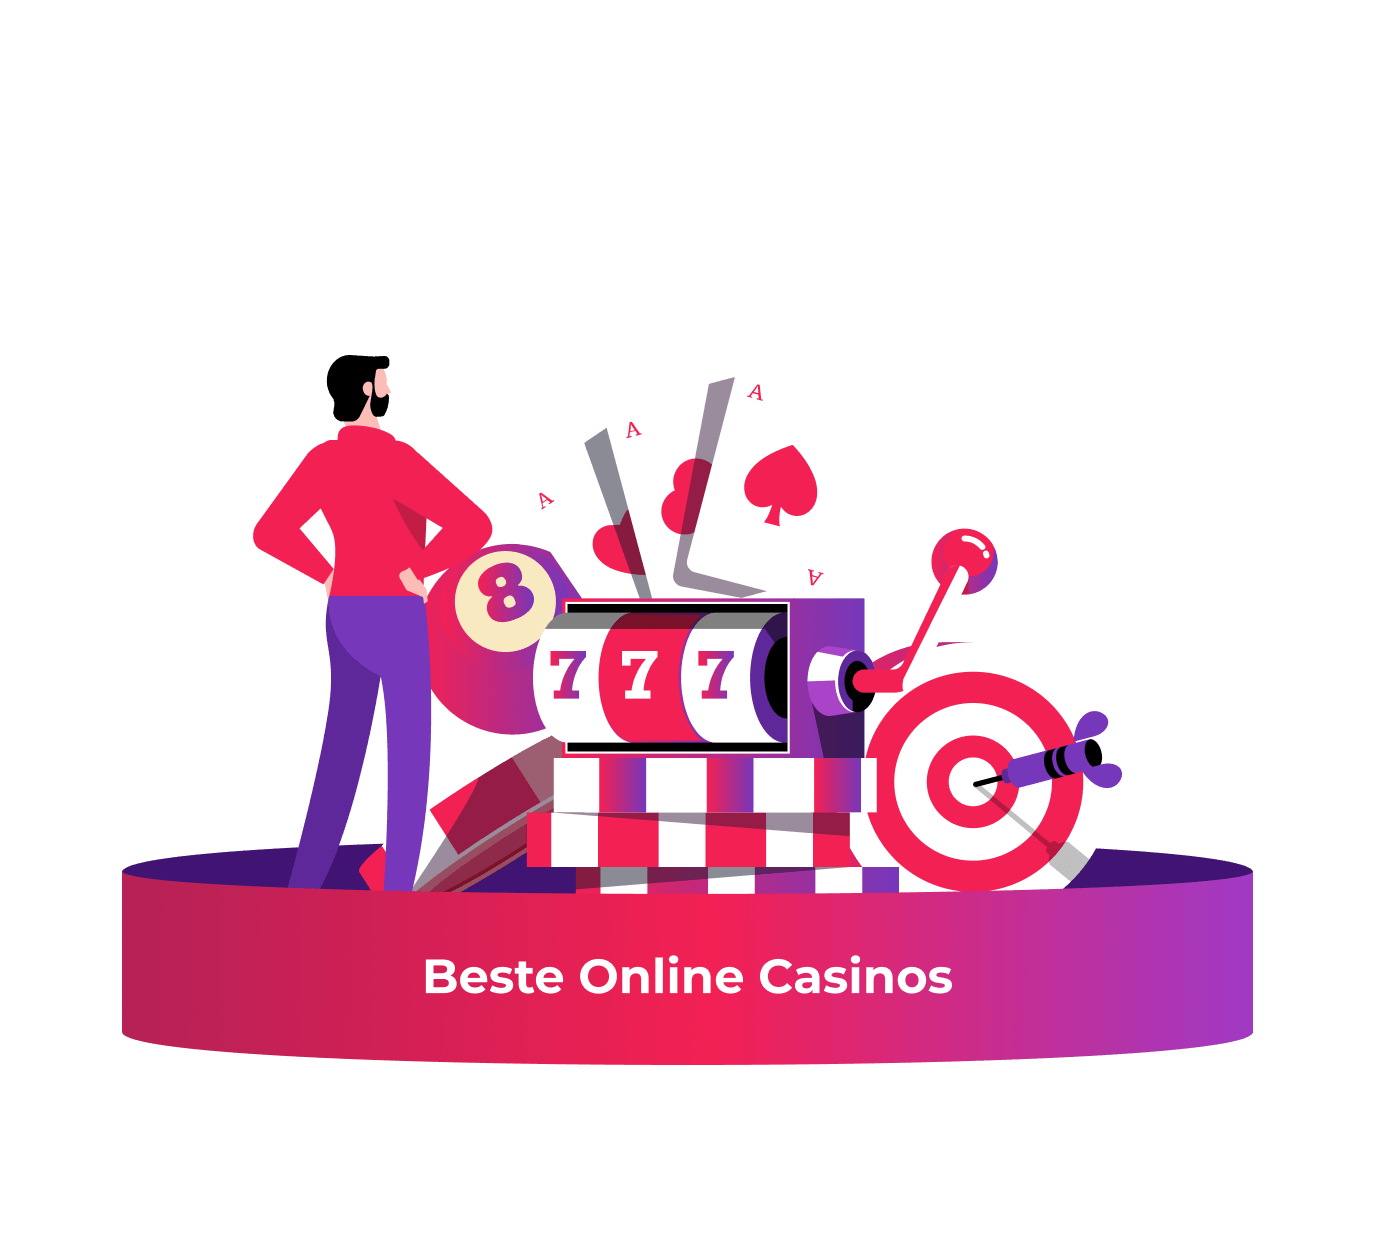 Casinos Online: Der Samurai-Weg